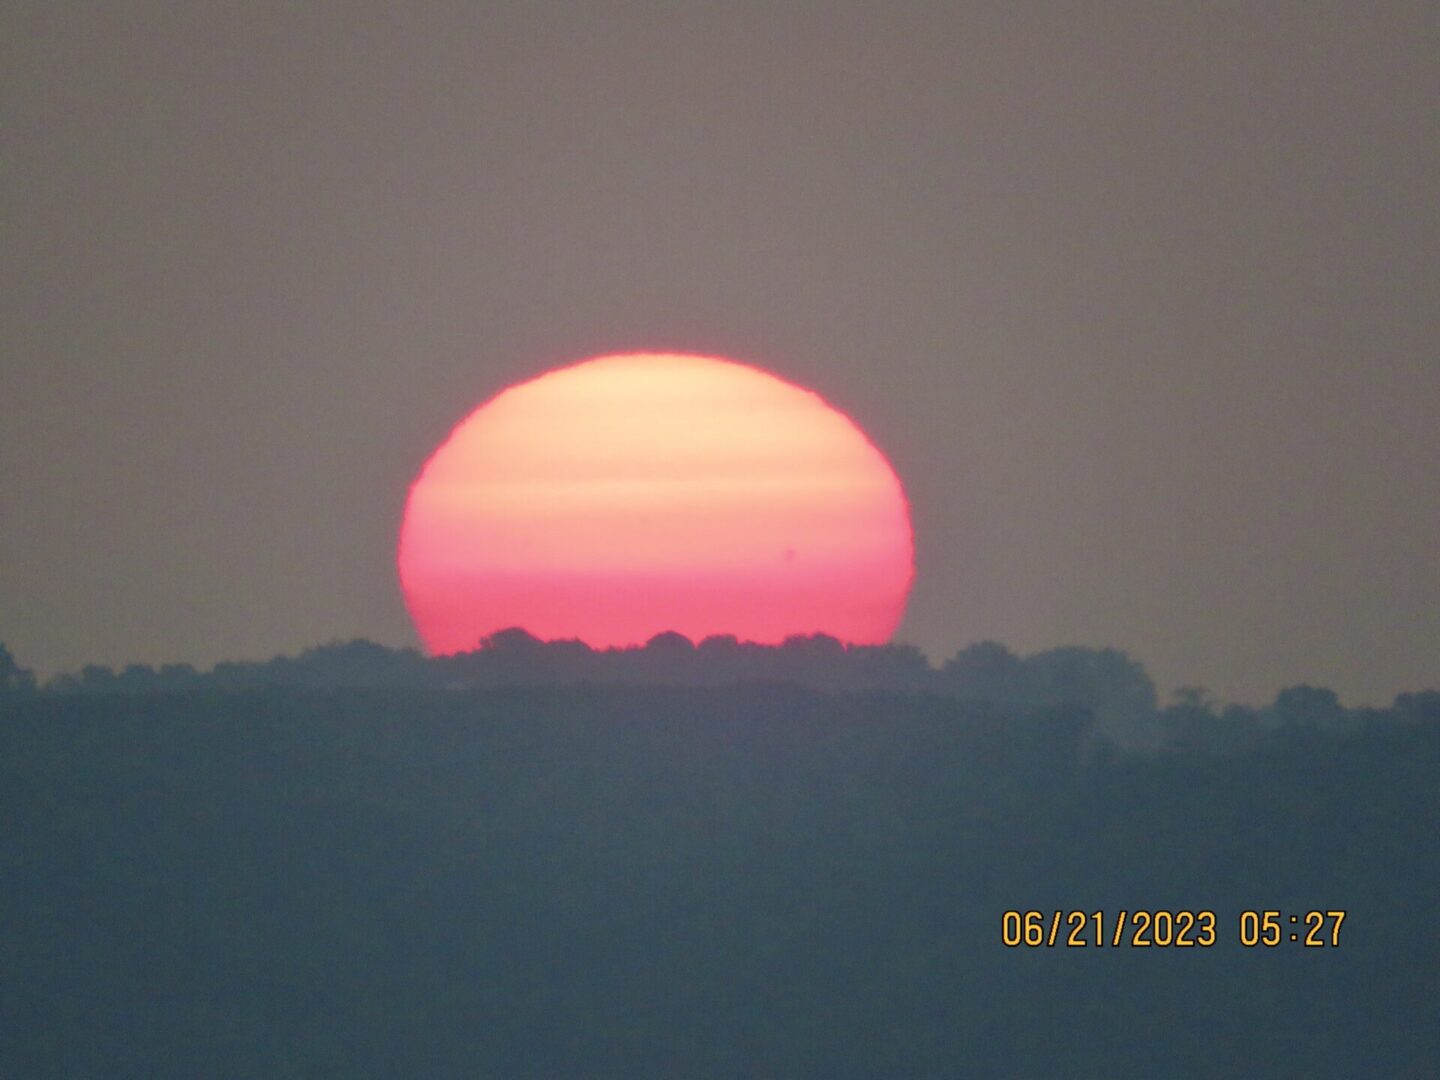 Sunrise on June 21, 2023.